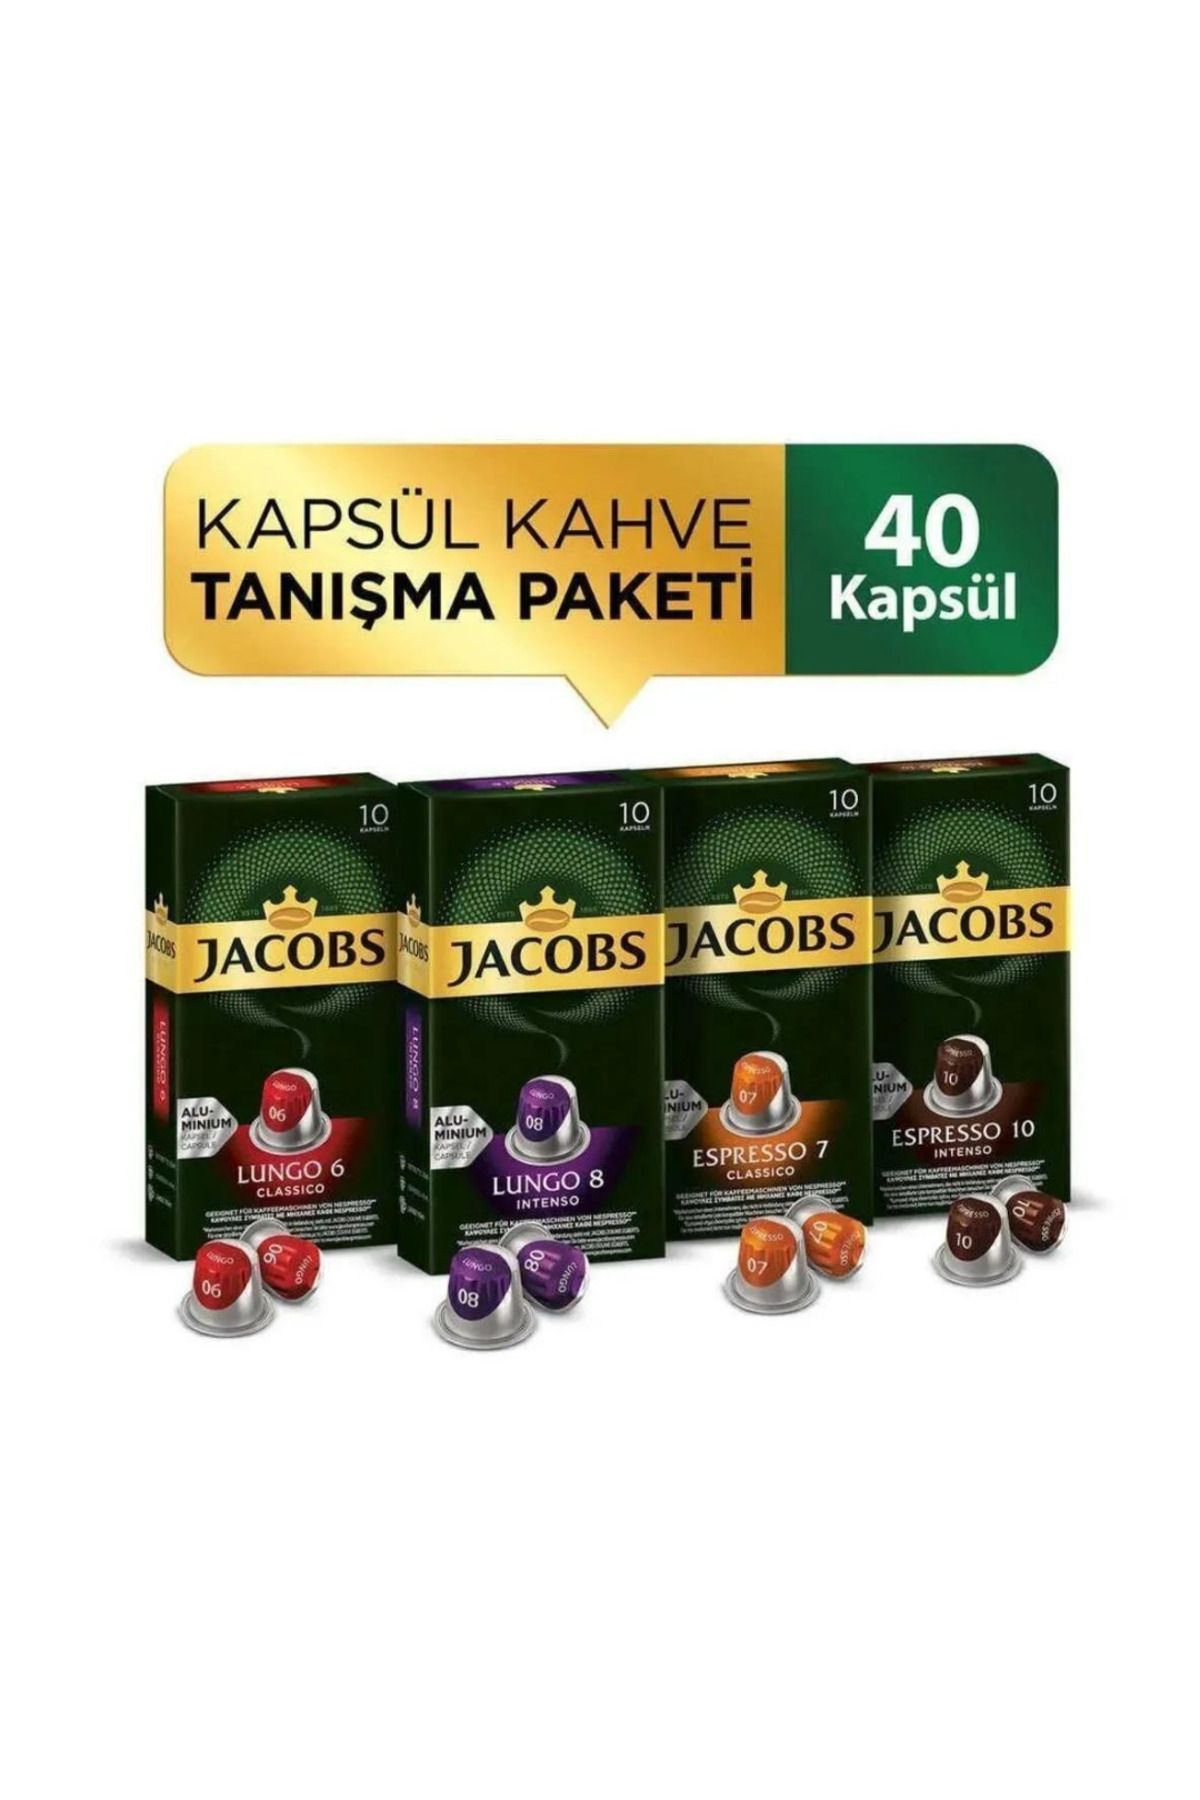 Jacobs Bienka Karton Bardak 40 Adet Yanında Kapsül Kahve Tanışma Paketi 40 Kapsül